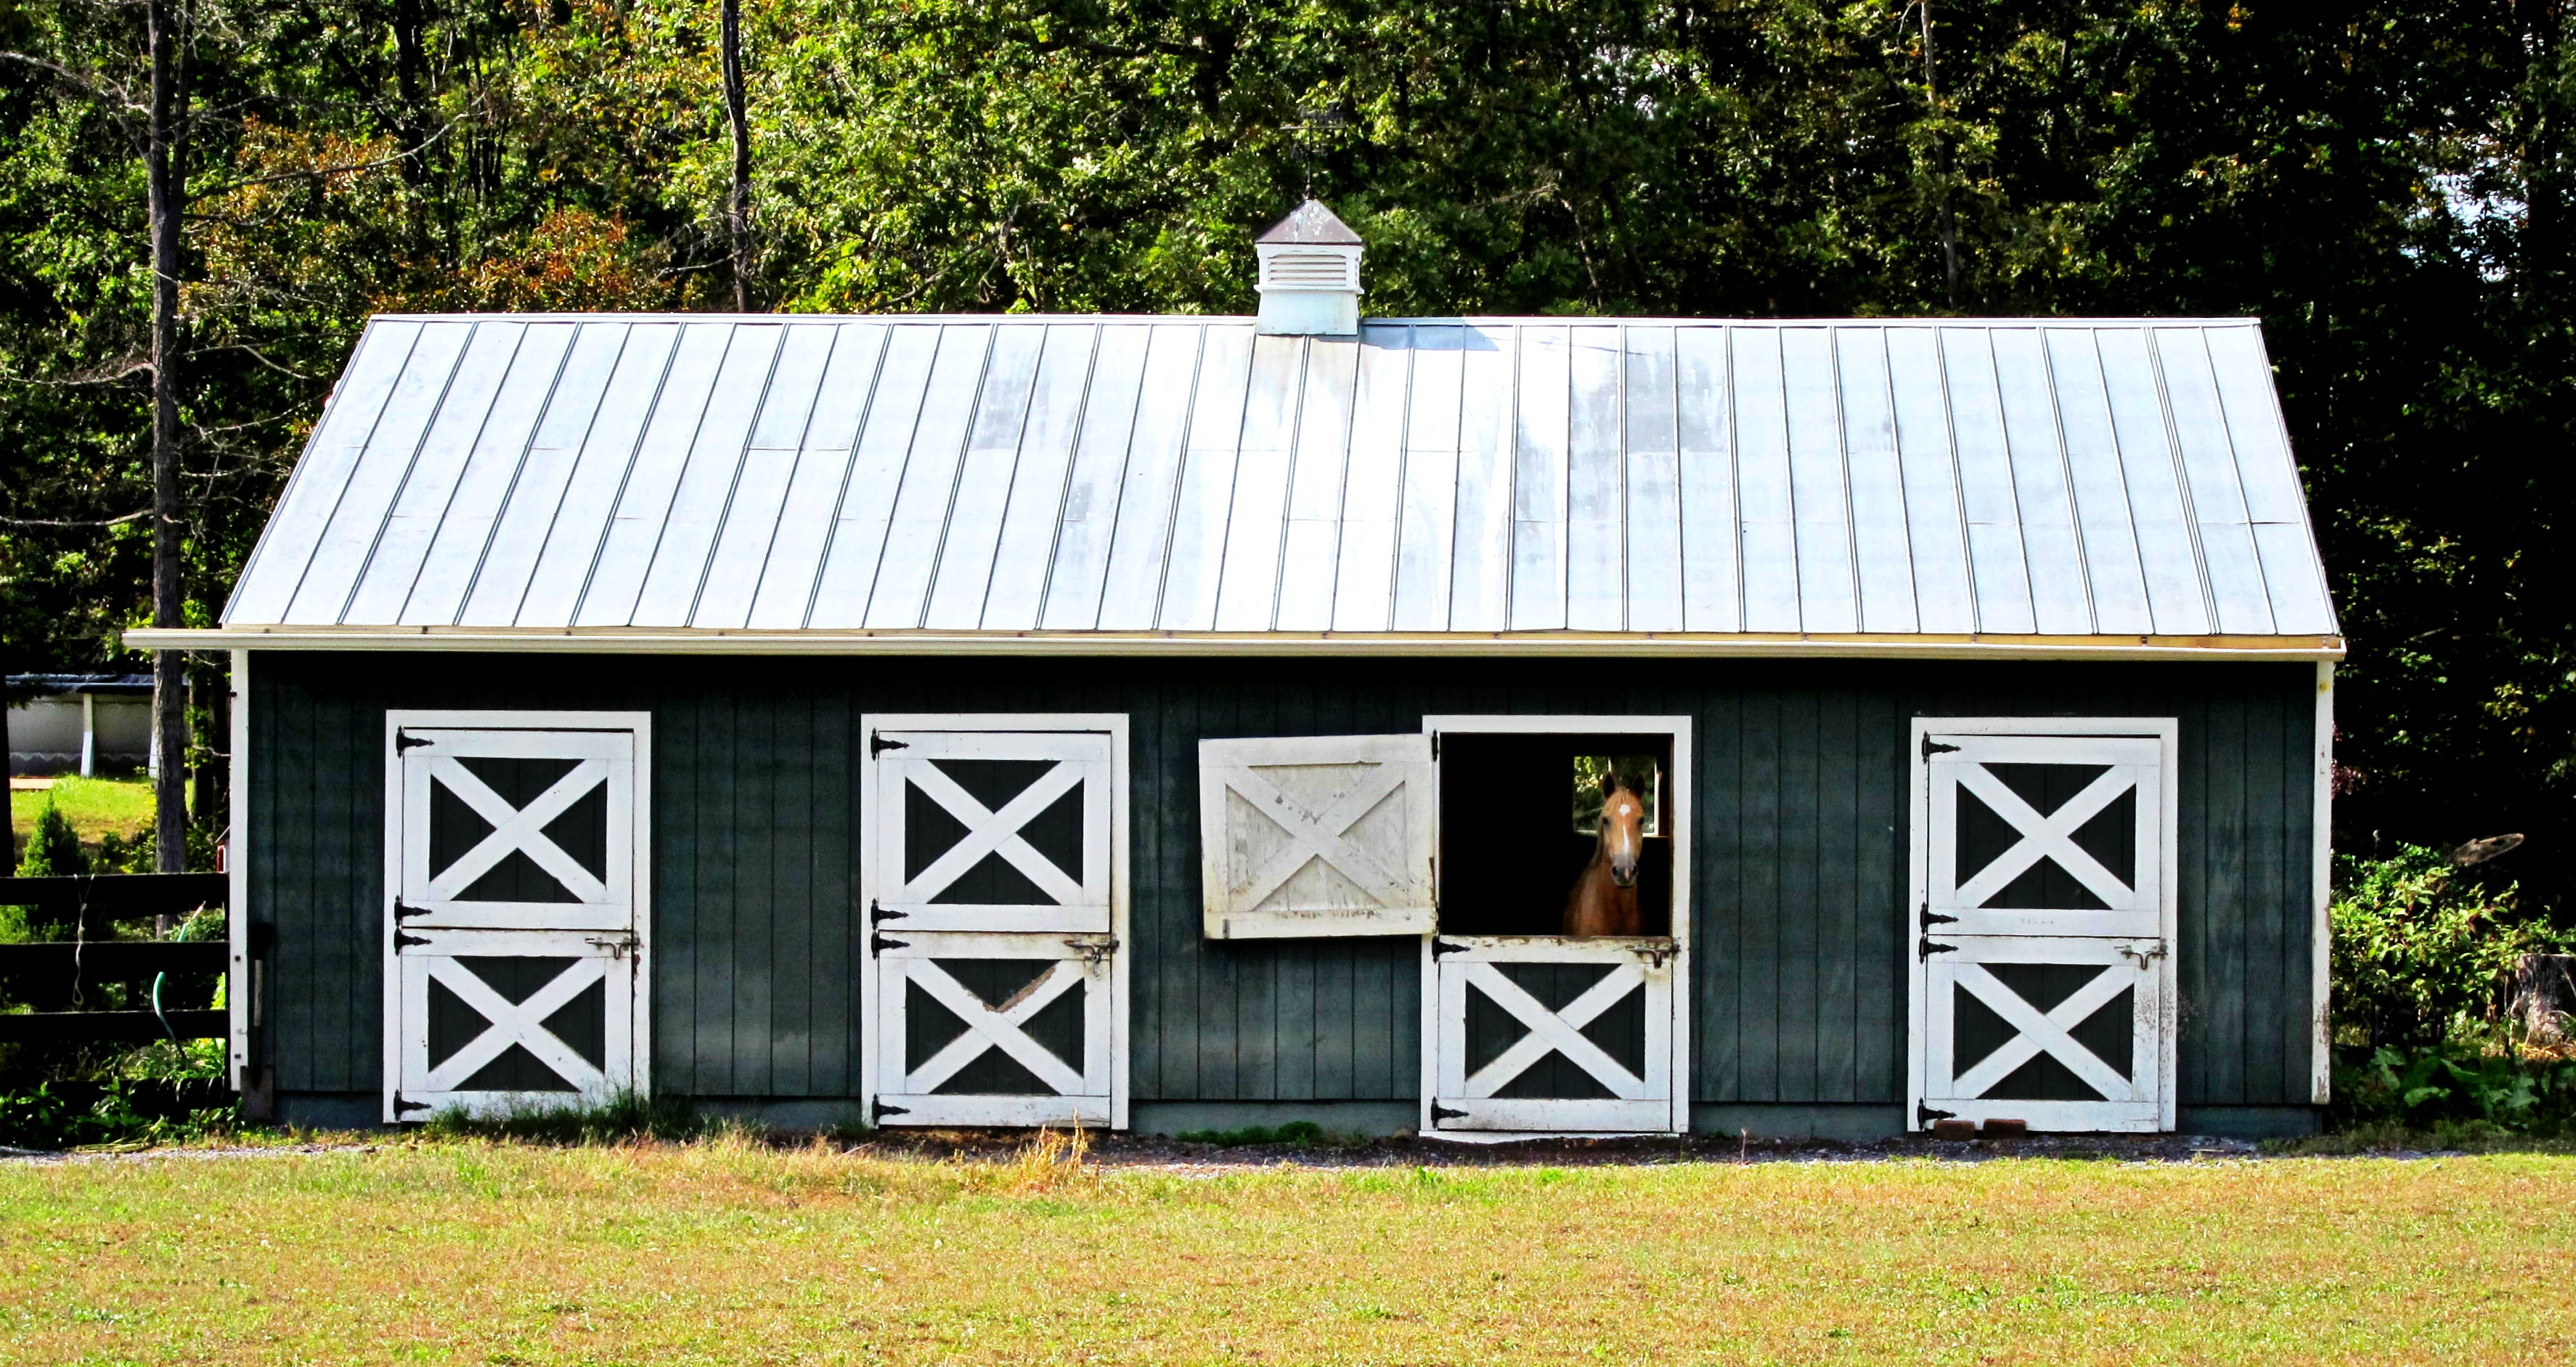 File:Horse stable - Middletown.jpg - Wikimedia Commons